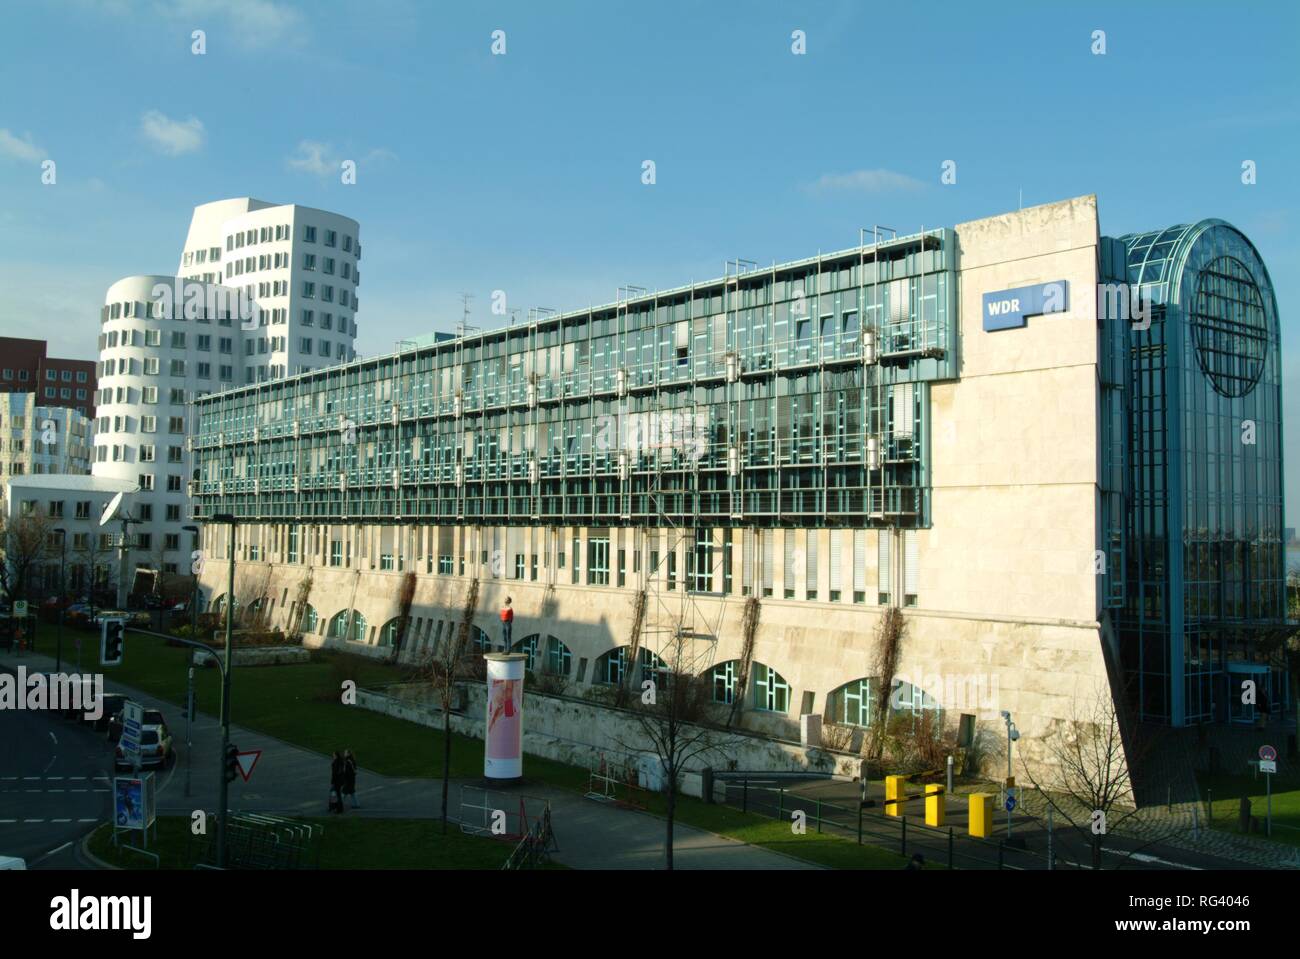 DEU, Germany: Building of the public german TV and radio station West Deutscher Rundfunk, WDR in Duesseldorf. Stock Photo